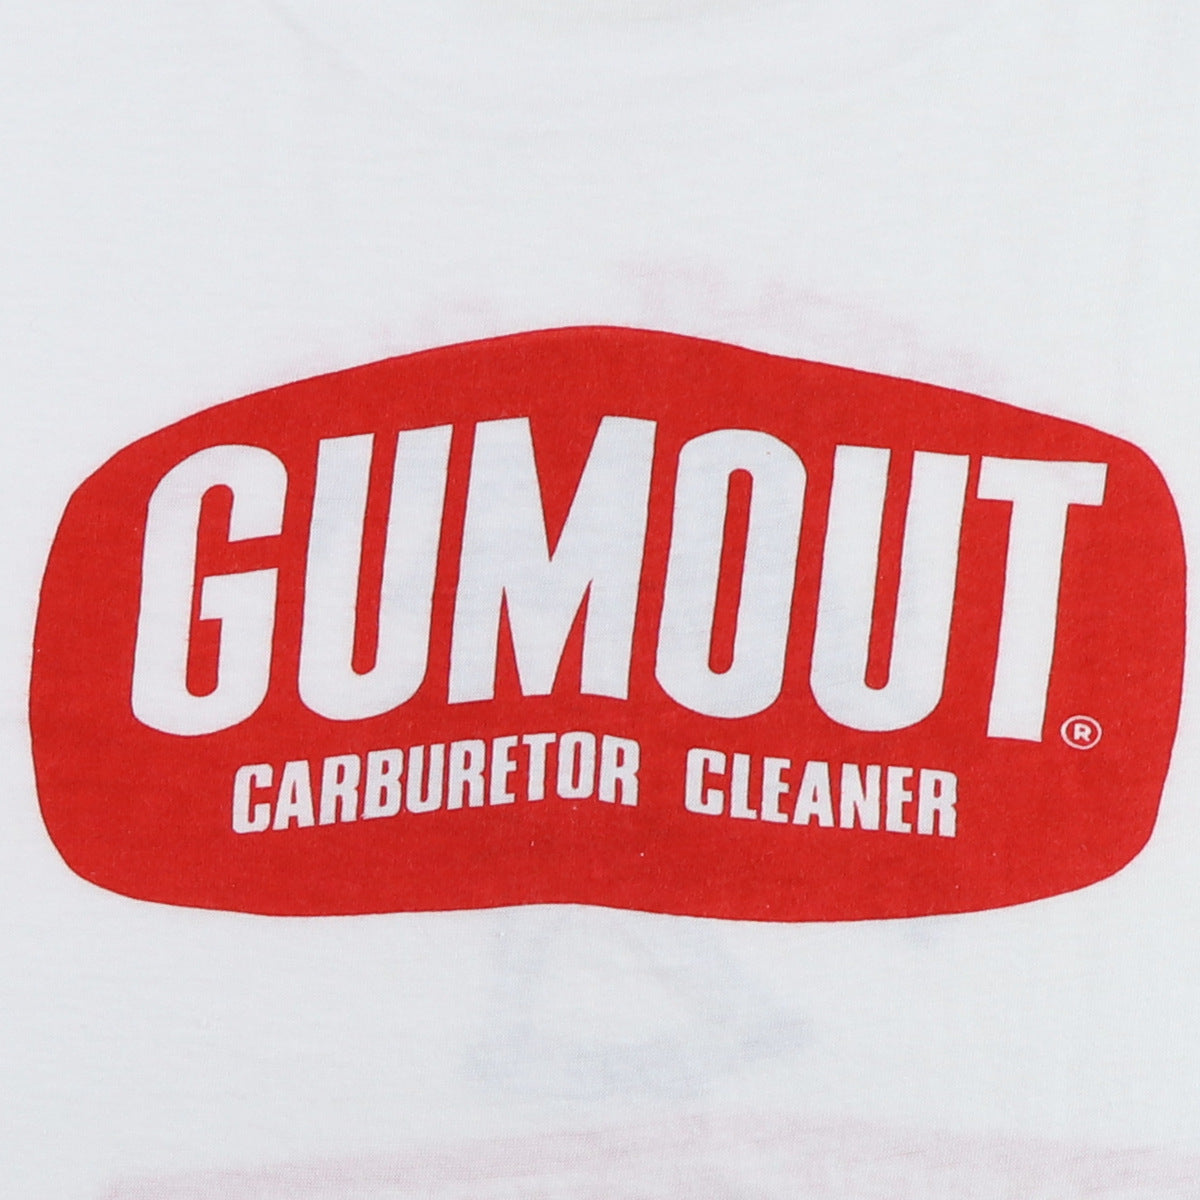 1970s Gumout Carburetor Cleaner Shirt